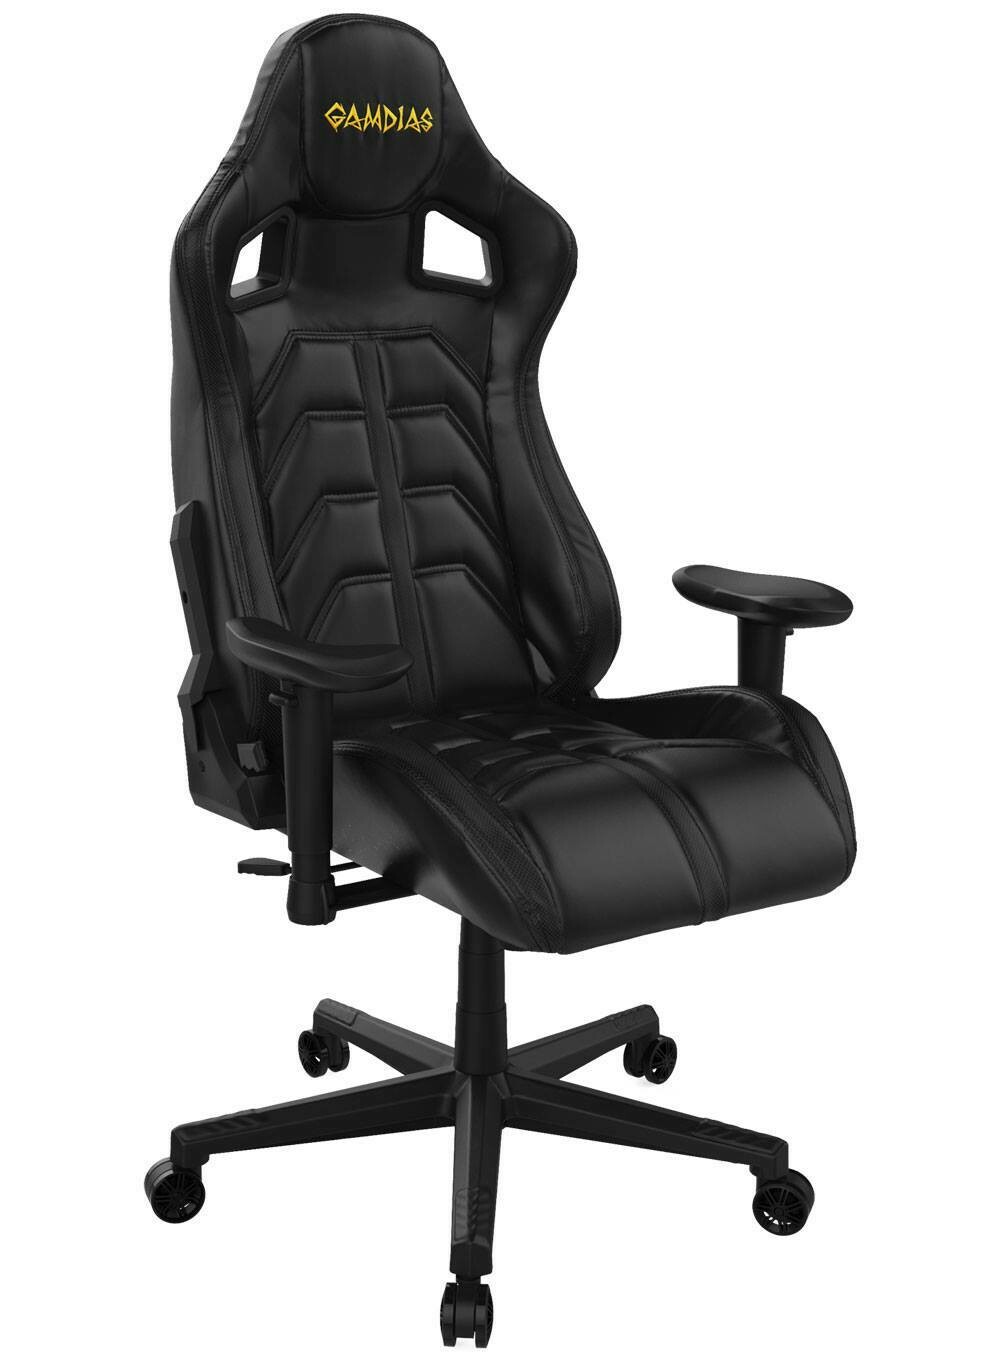 GAMDIAS APHRODITE MF1-L Black Gaming Chair